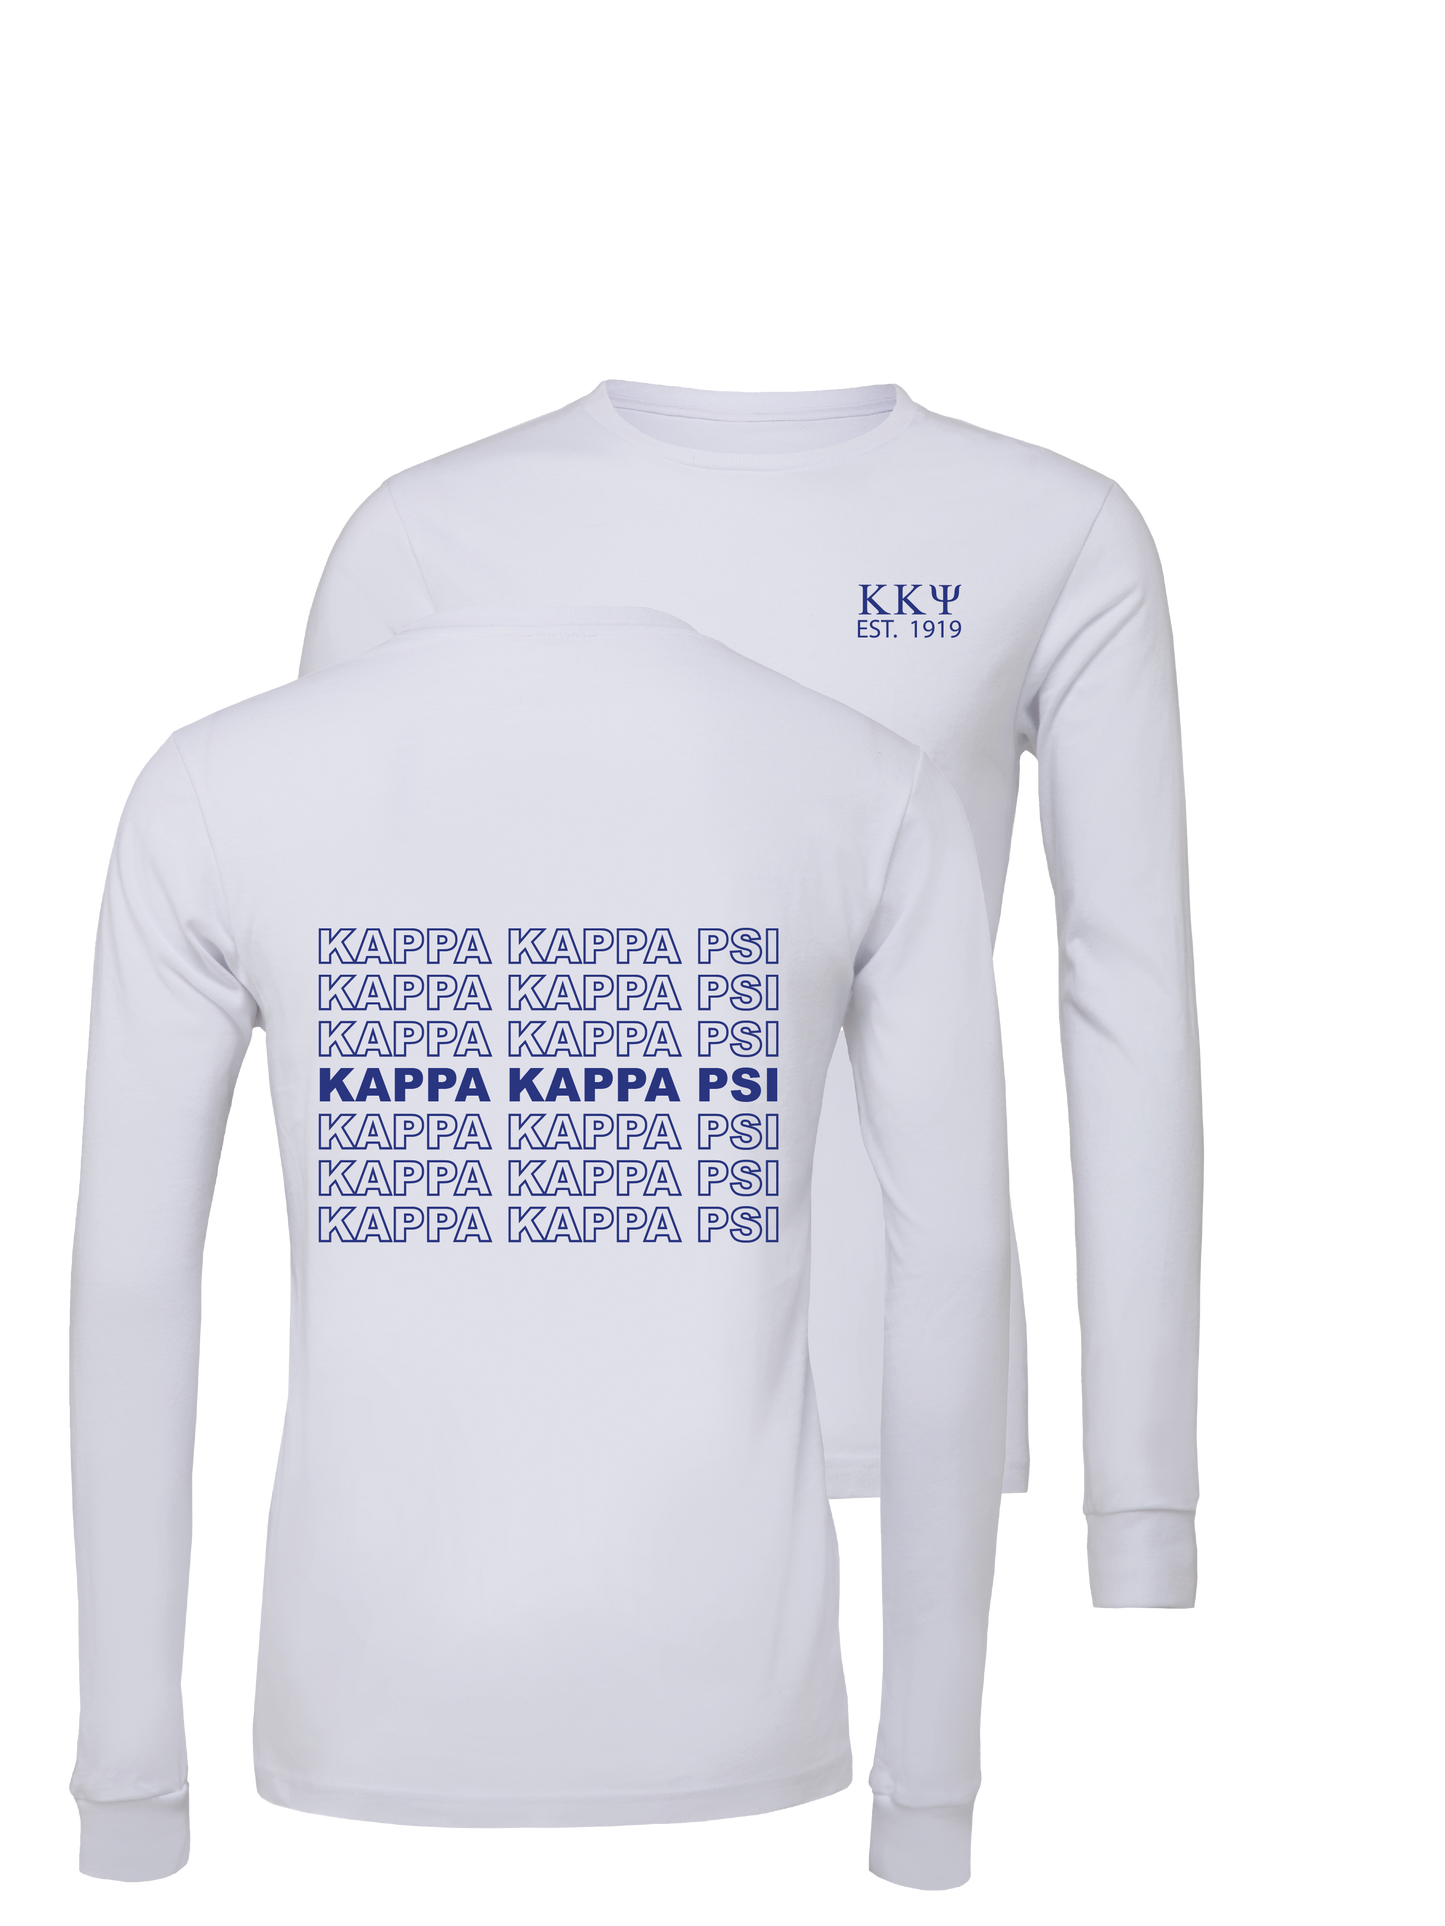 Kappa Kappa Psi Repeating Name Long Sleeve T-Shirts